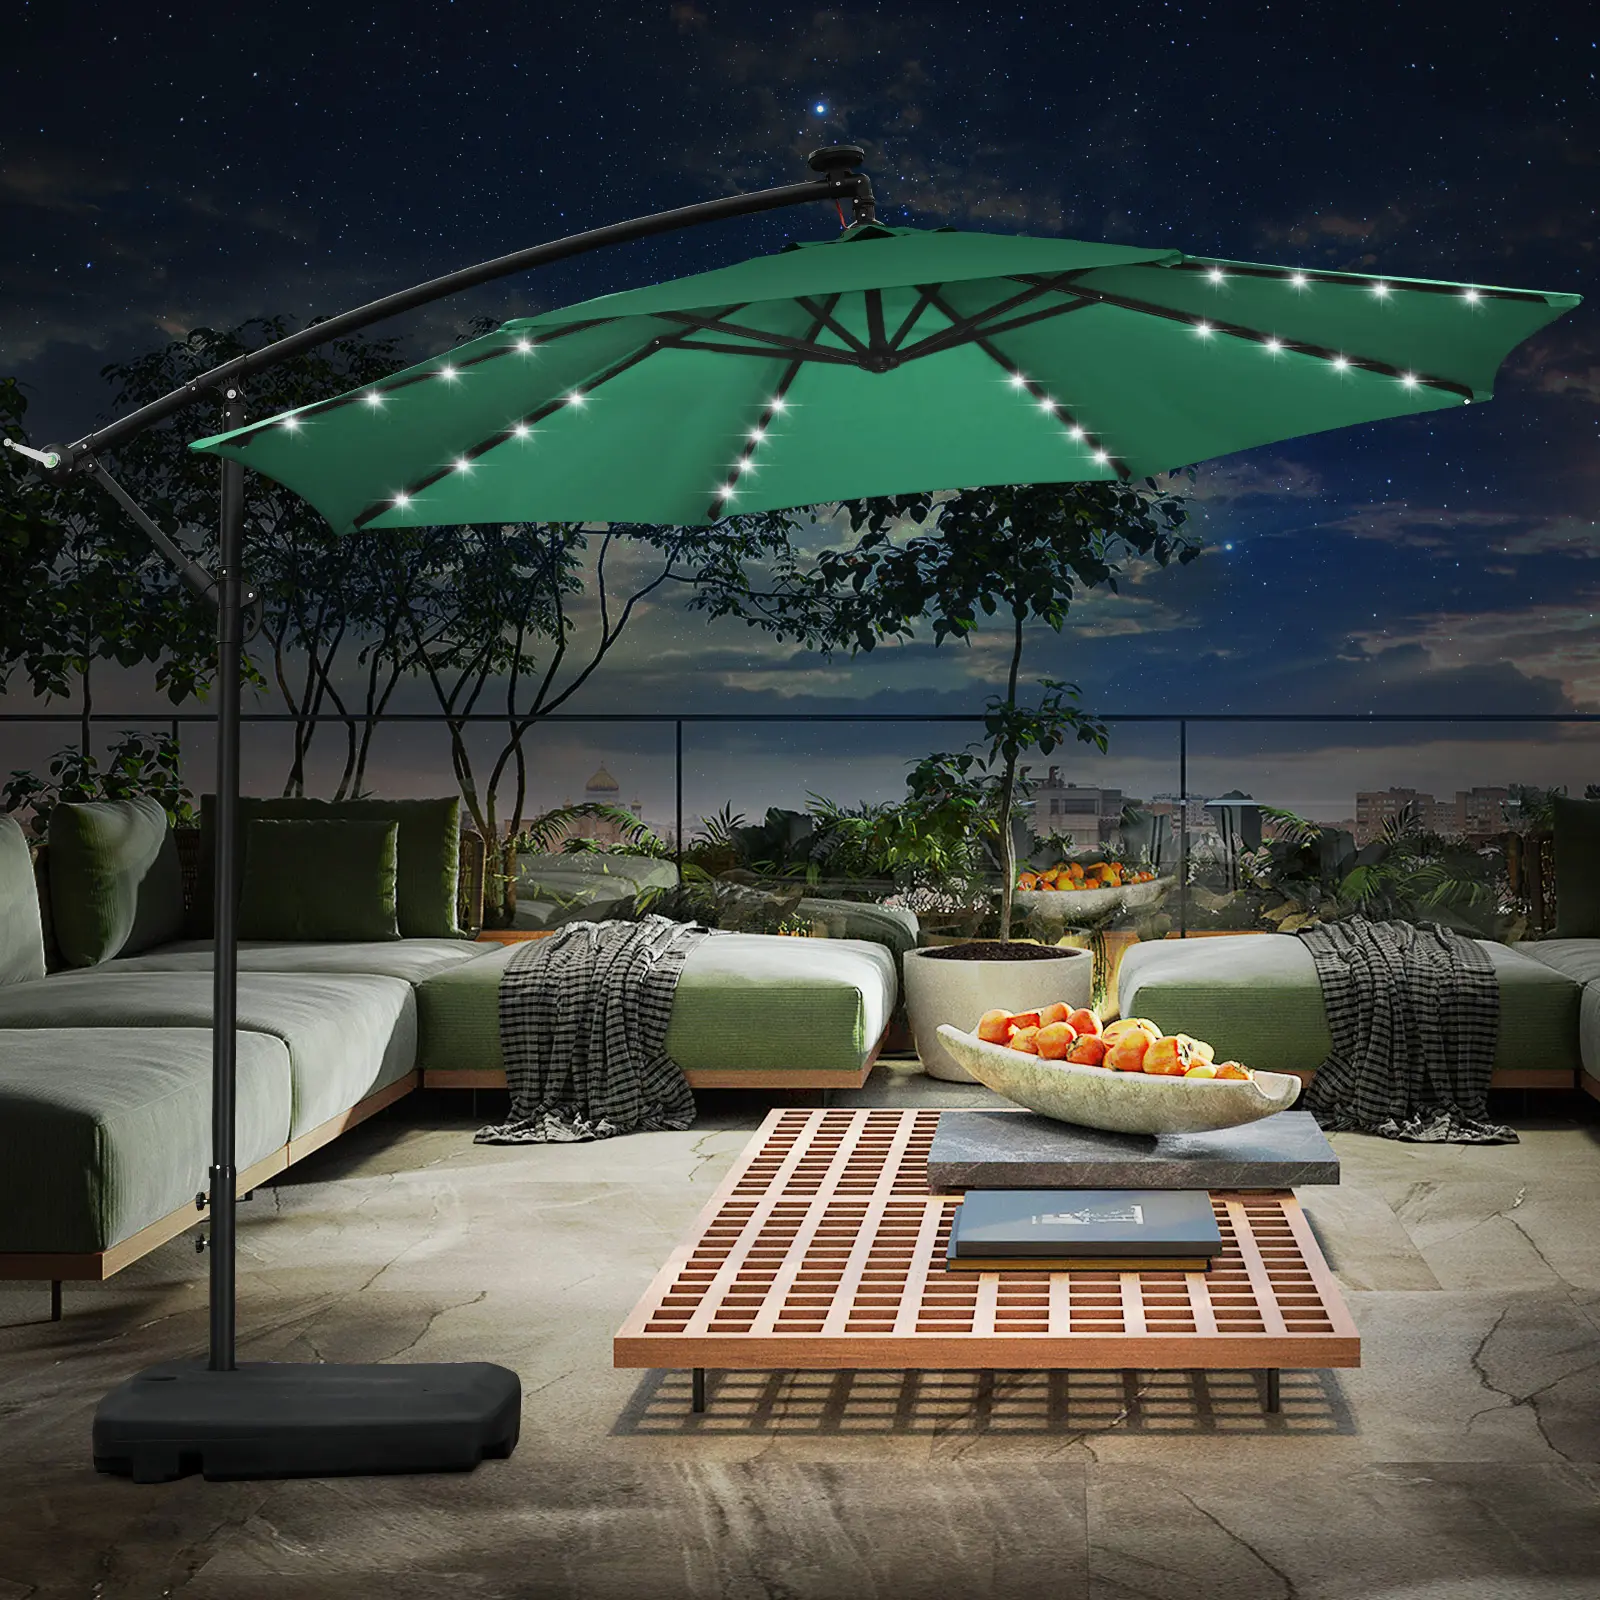 HUAHONG LEDヘッドライトビーズソーラーサンブレラバナナ傘印象的な屋外用家具